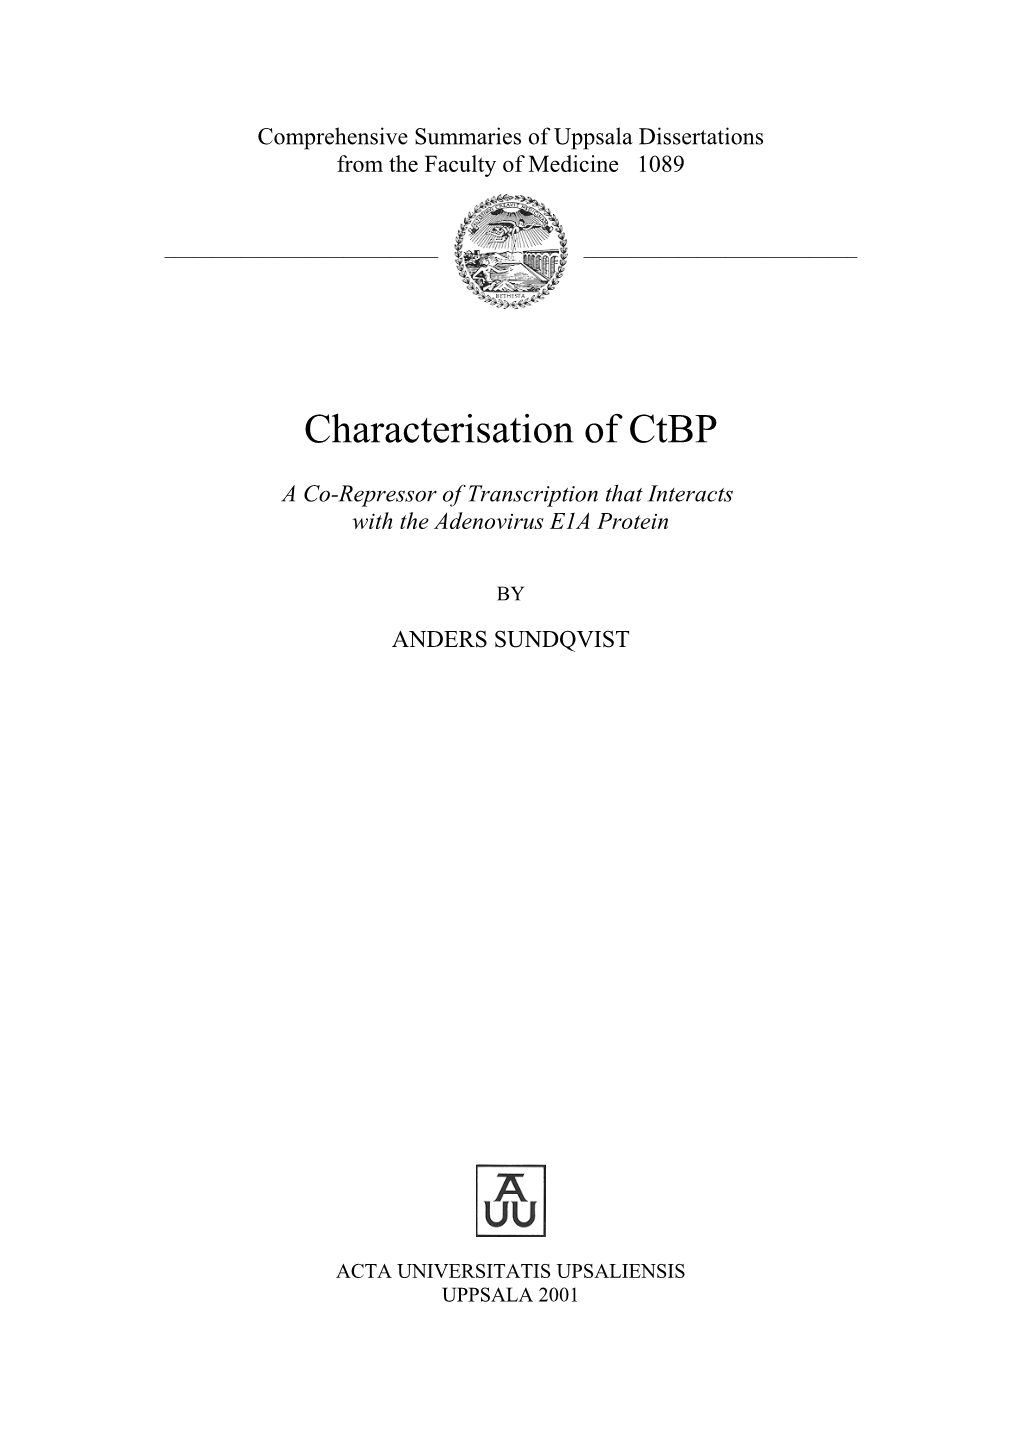 Characterisation of Ctbp